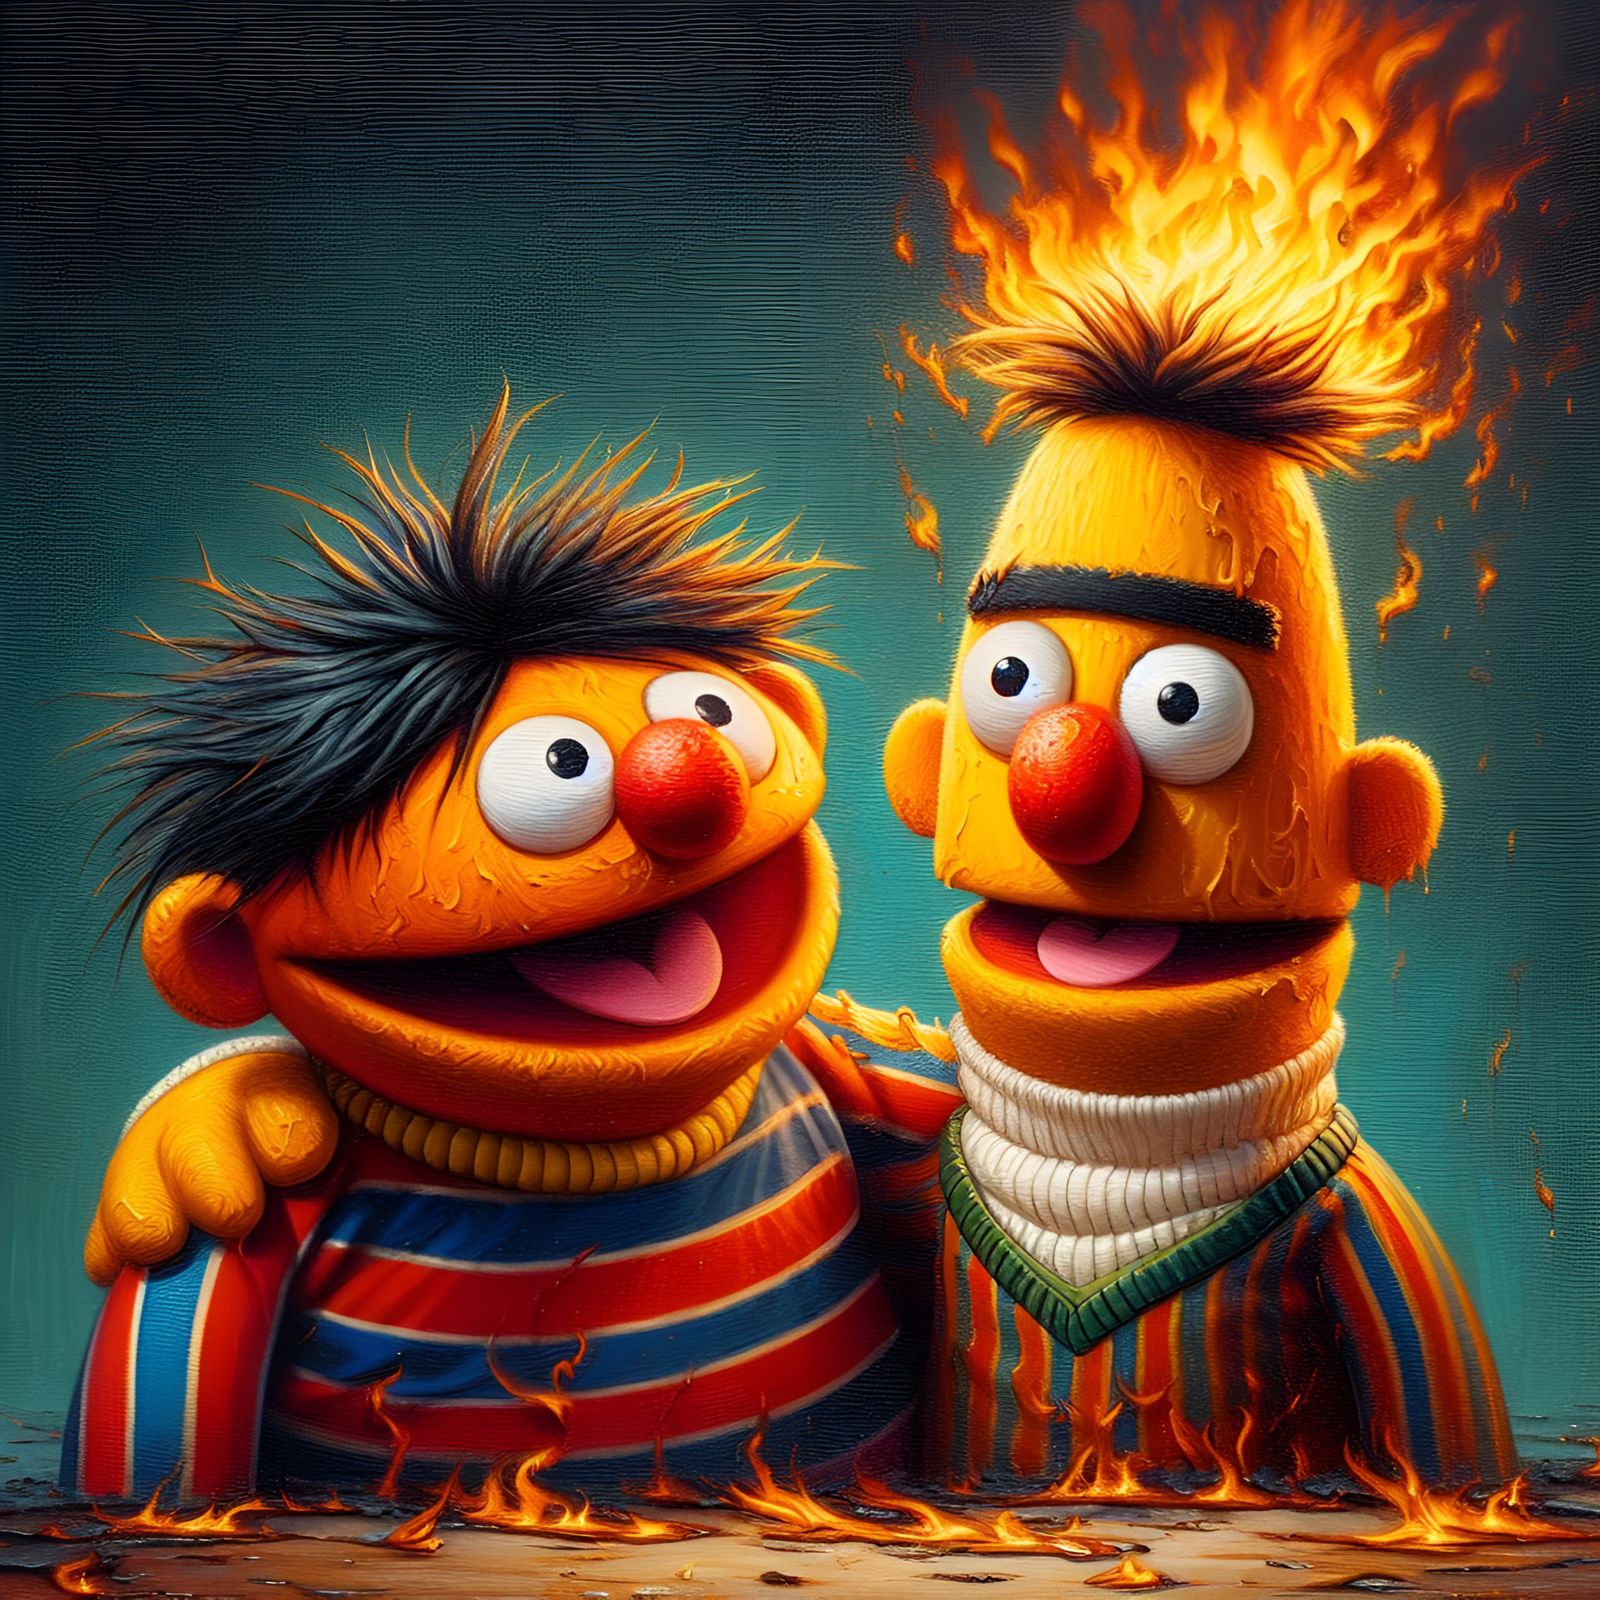 Burnt and Ernie